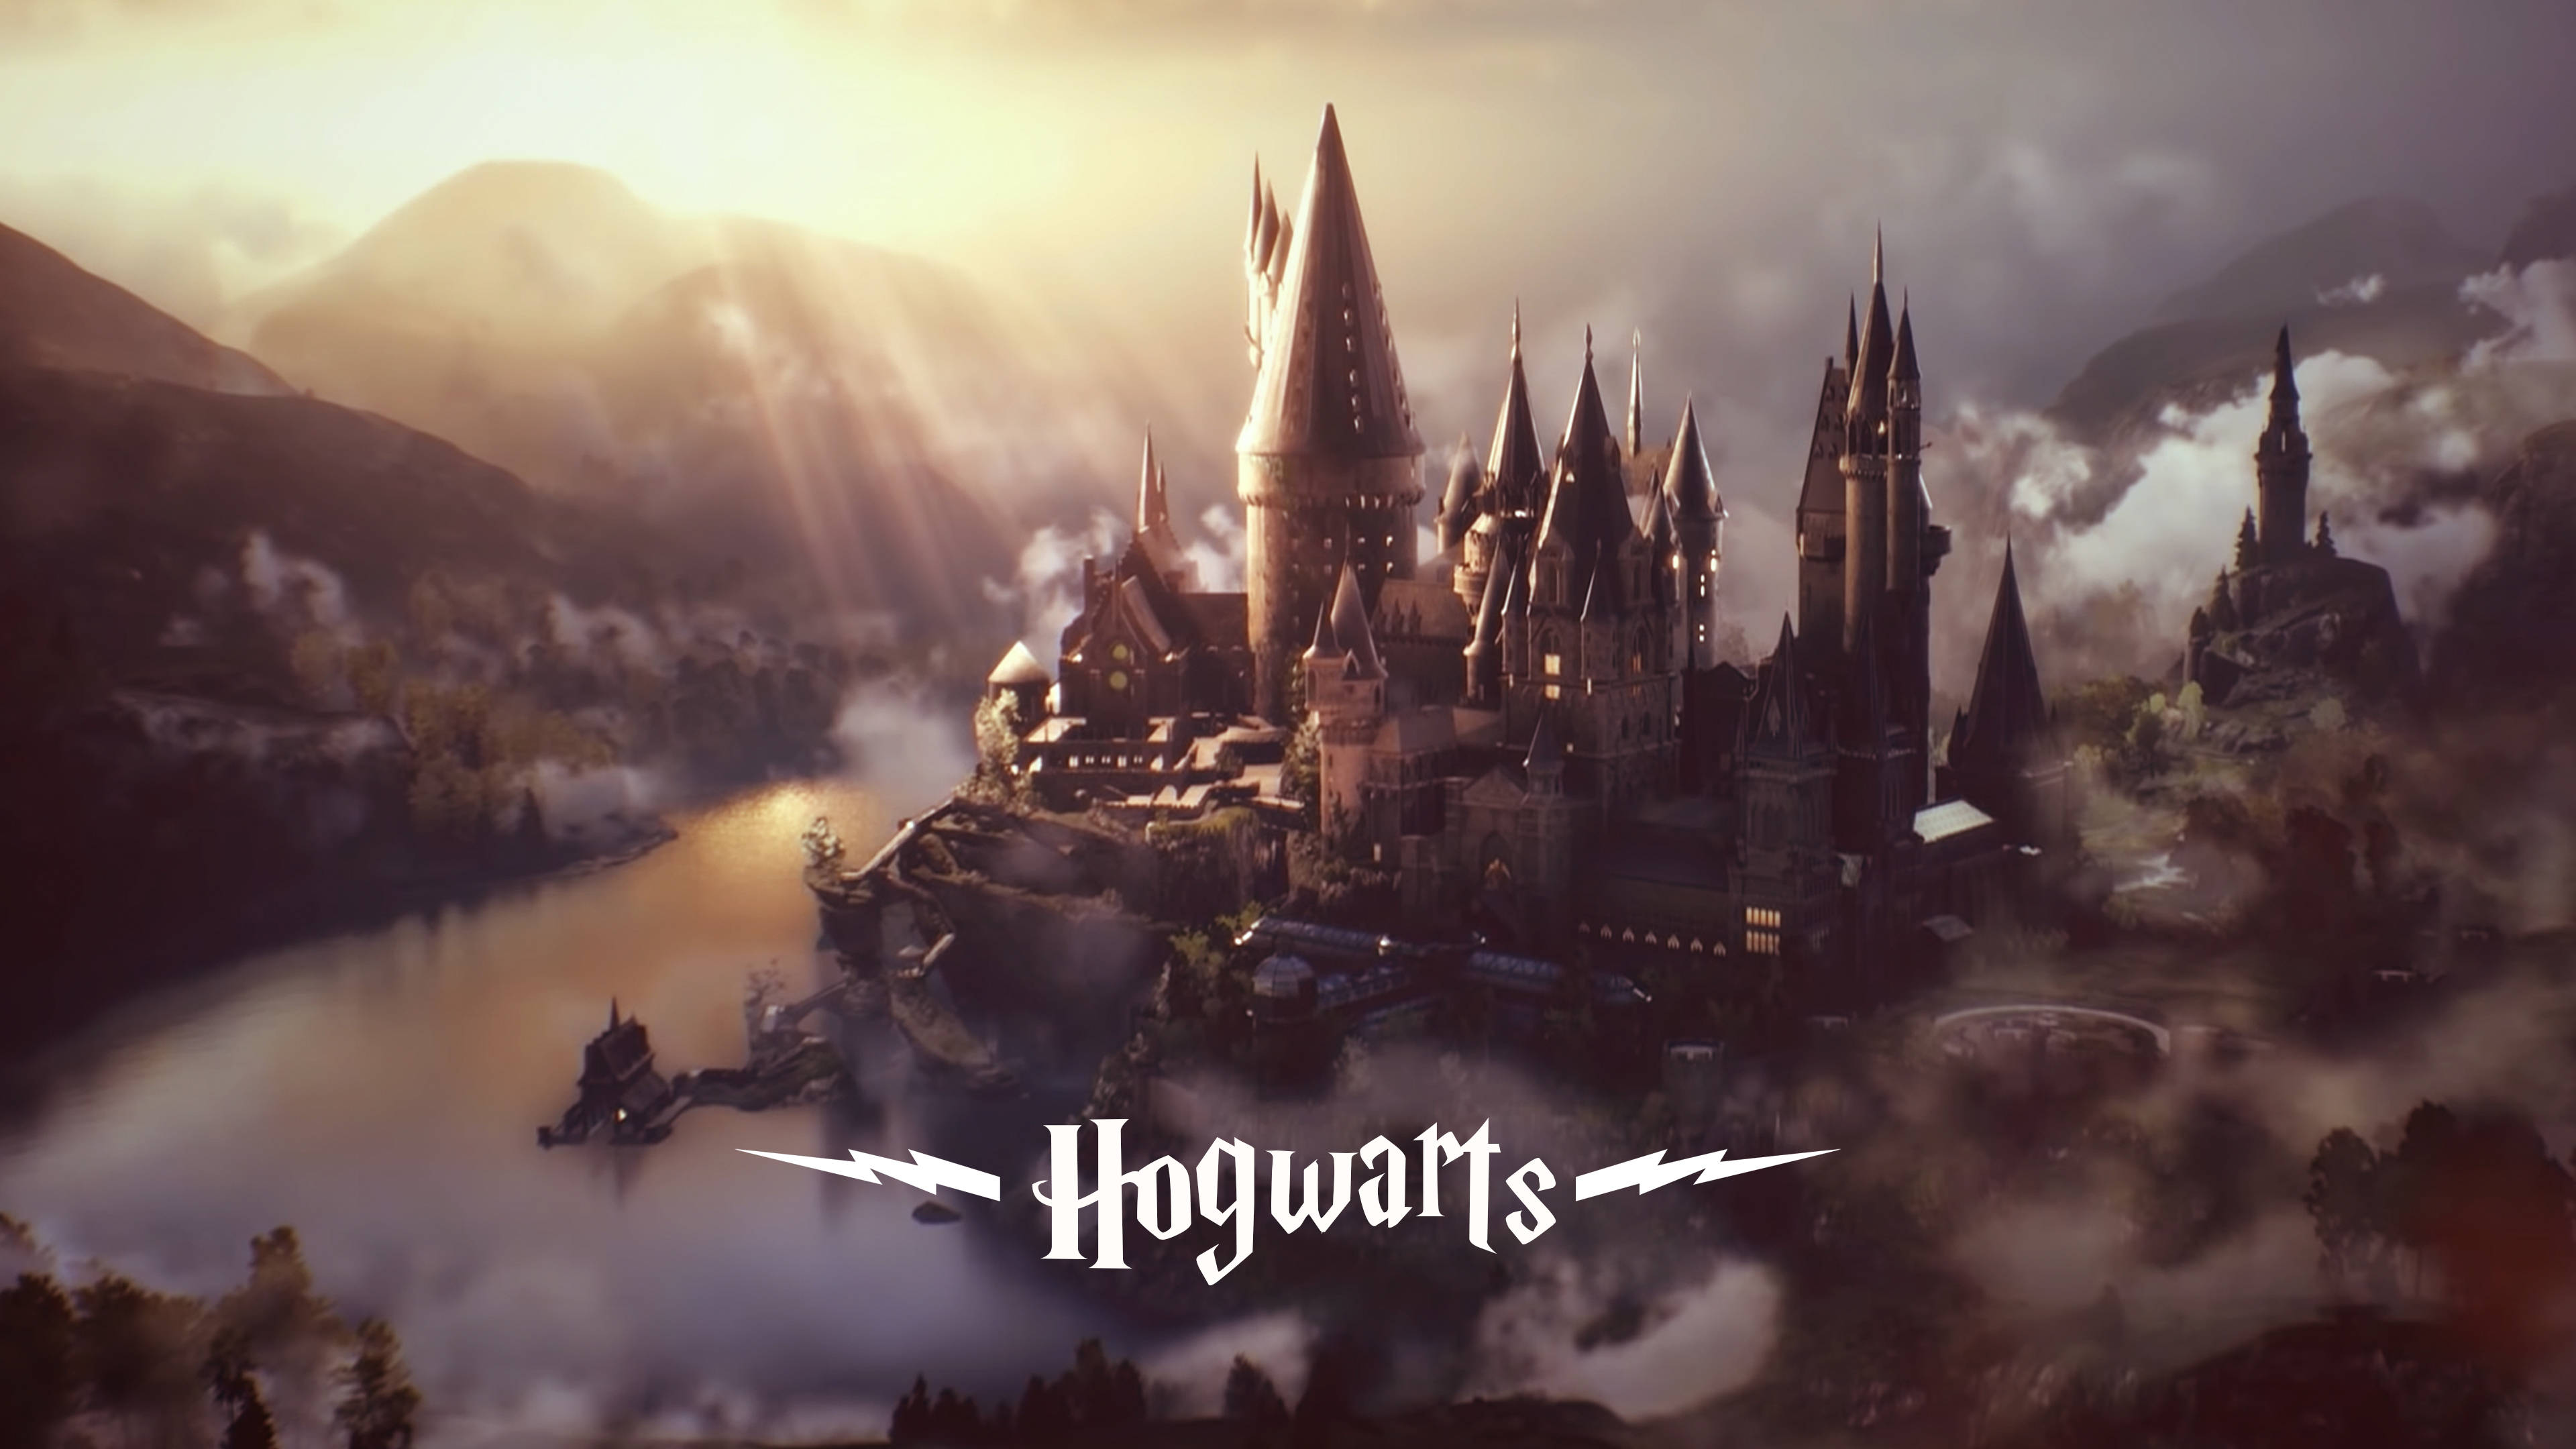 Download Harry Potter Hogwarts Castle Aesthetic Wallpaper ...